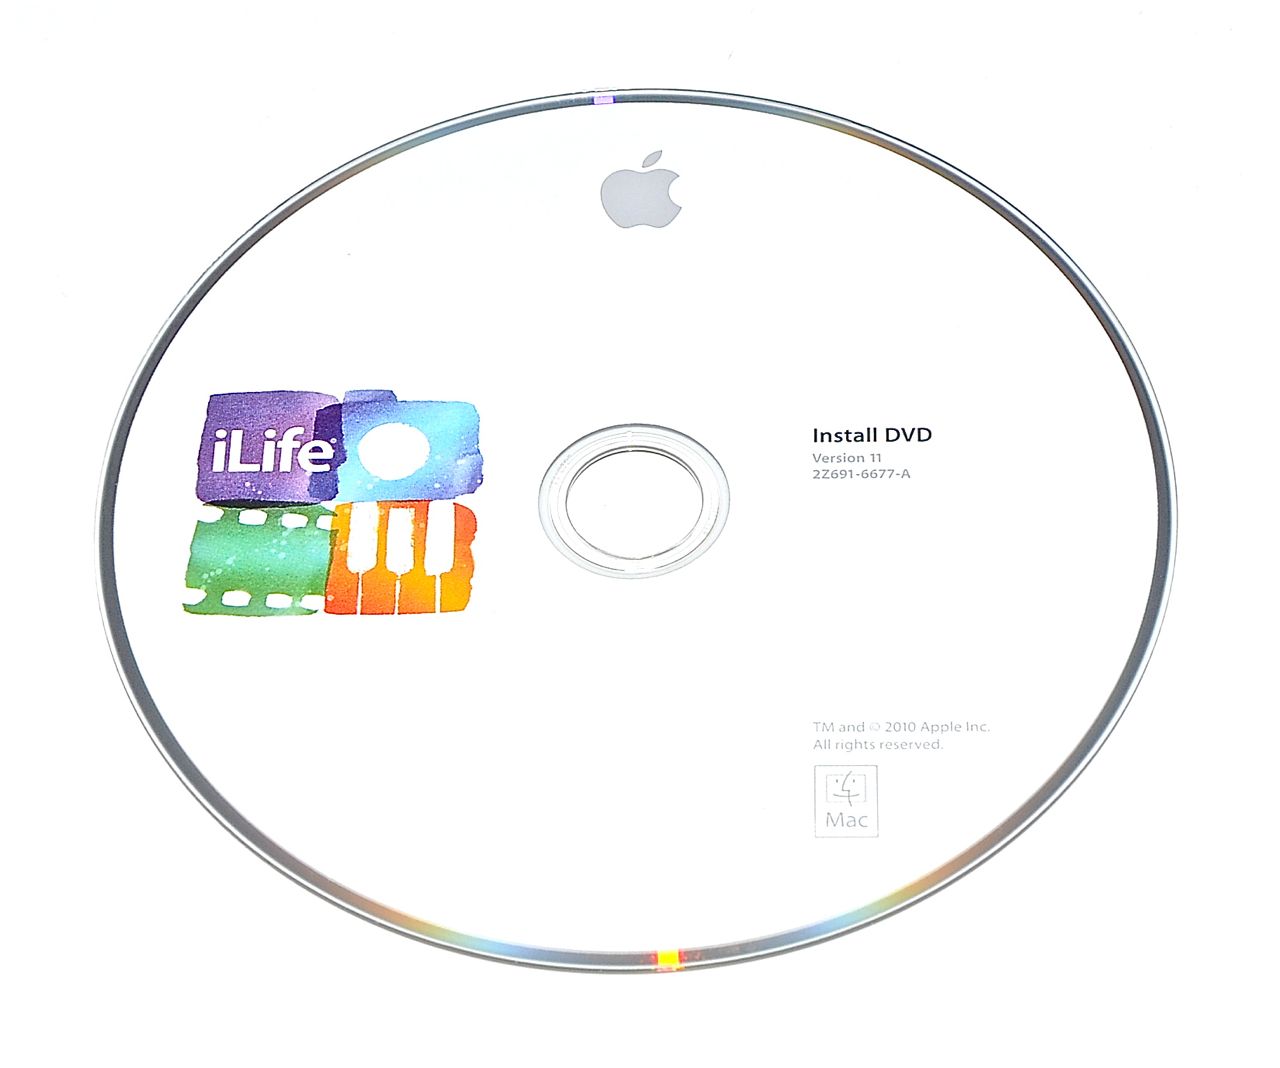 ilife 09 install dvd dmg file